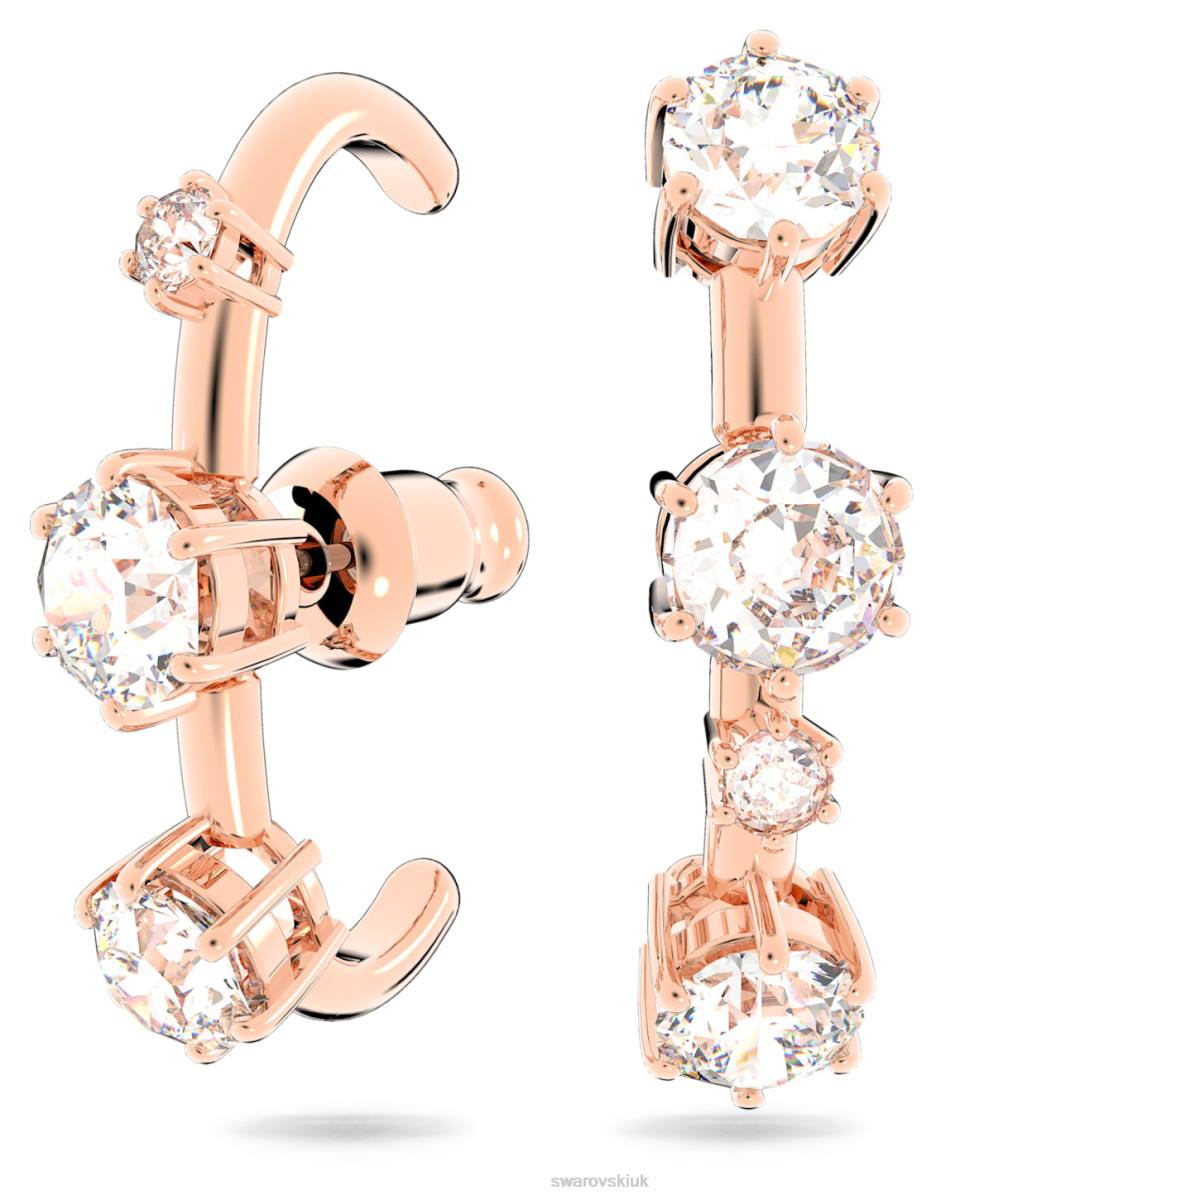 Jewelry Swarovski Constella ear cuffs Asymmetrical design, Round cut, White, Rose gold-tone plated 48JX972